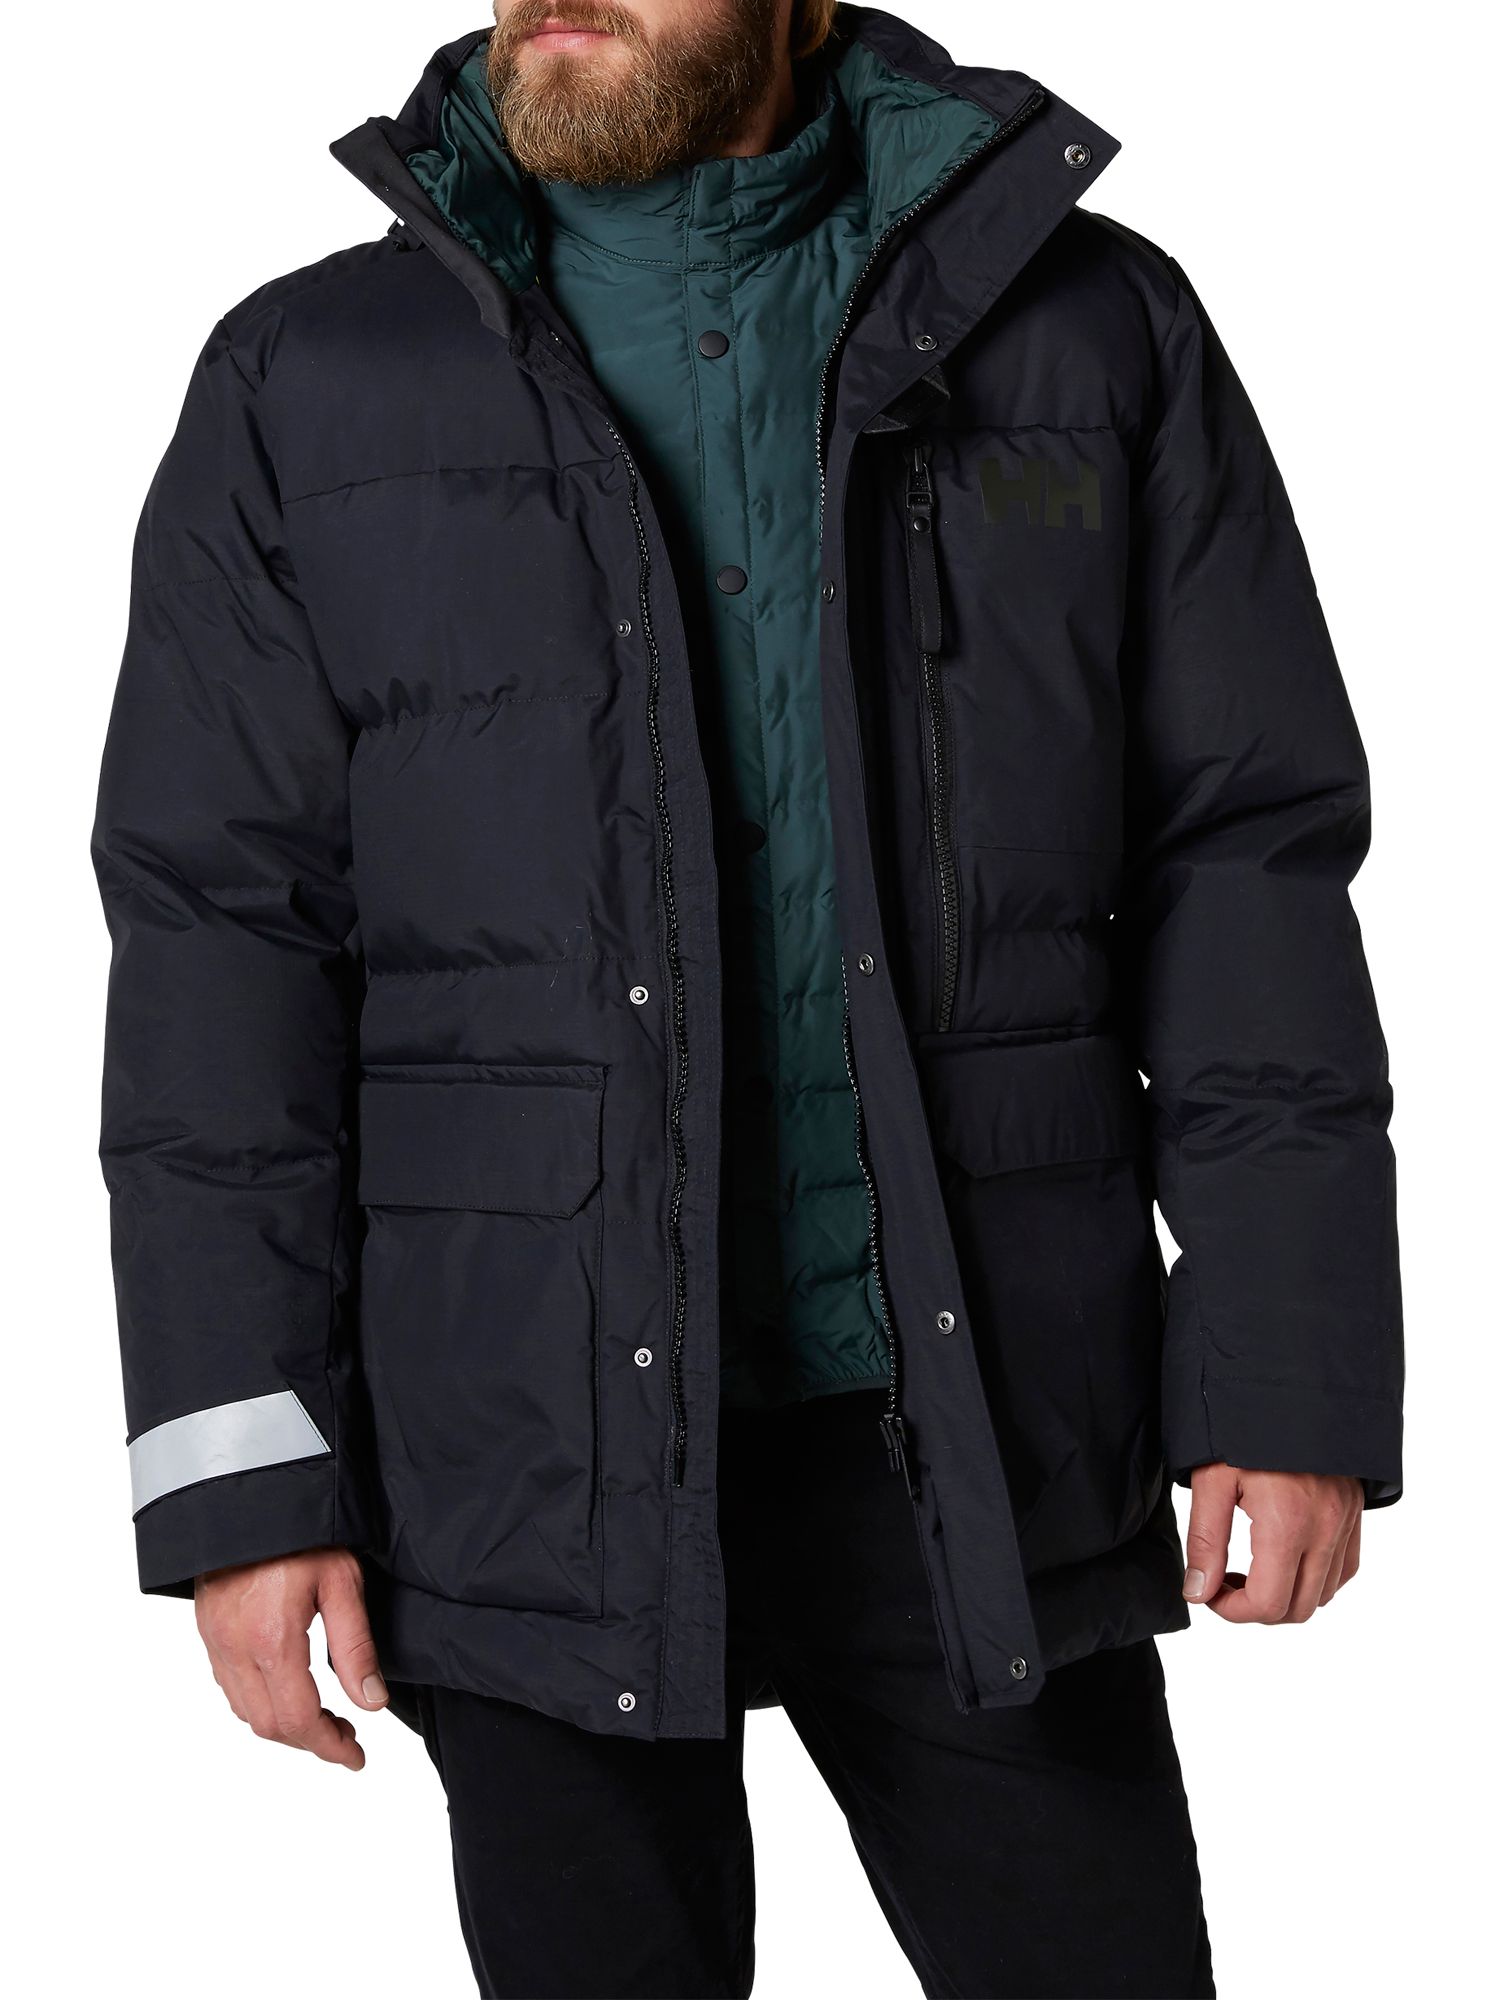 Helly Hansen Tromsoe Waterproof Insulating Men's Jacket, Black at John ...